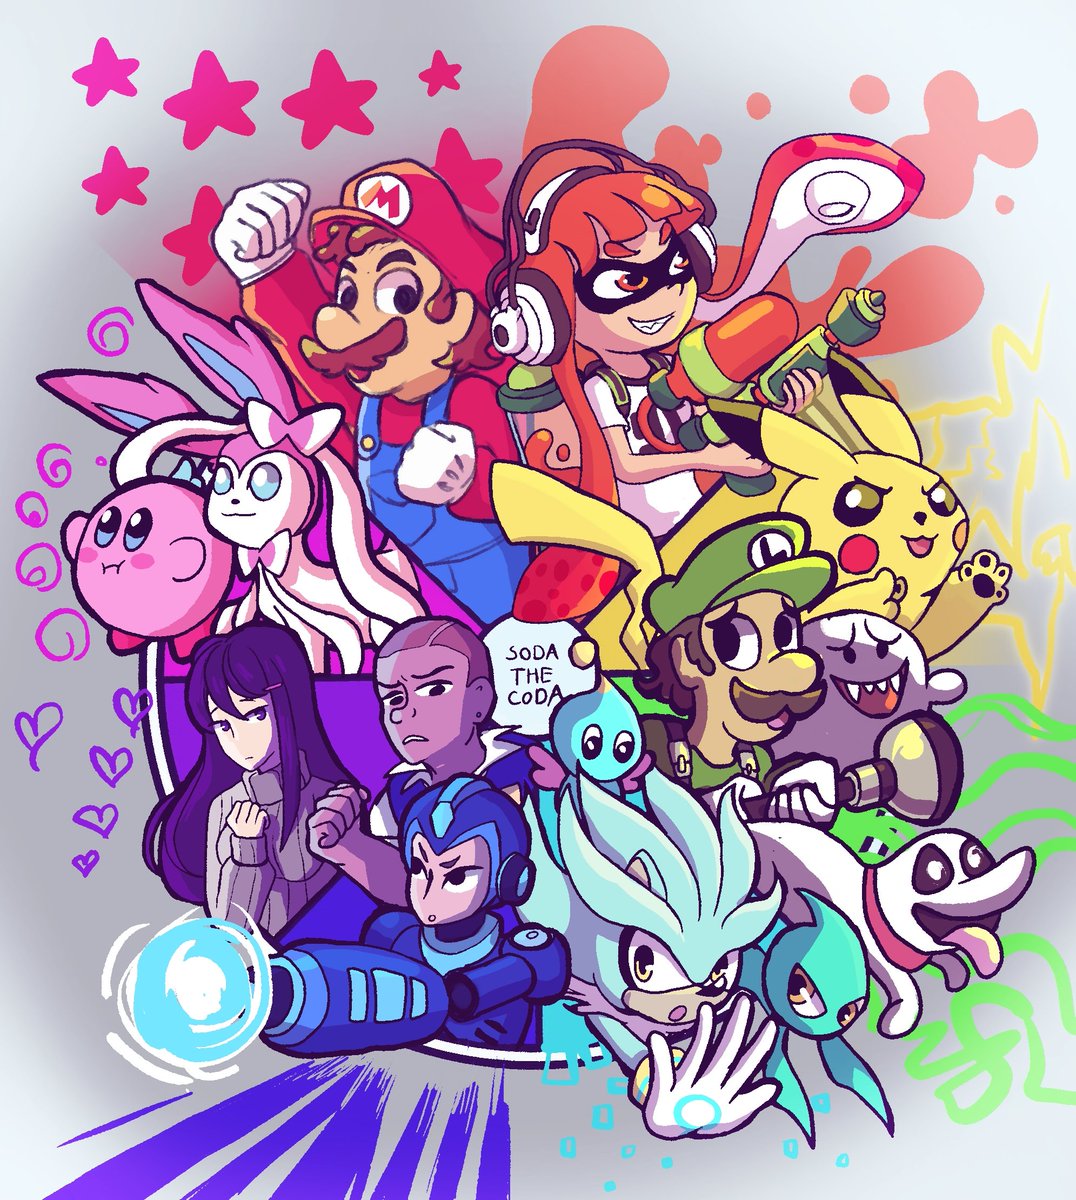 Sooo the whole color wheel is finished
Thank you for participating!
#colourwheelchallenge #colourwheel #Nintendo #mario #pokemon #luigi #SilverTheHedgehog #sonic #megaman #kirby #ddlc #splatoon